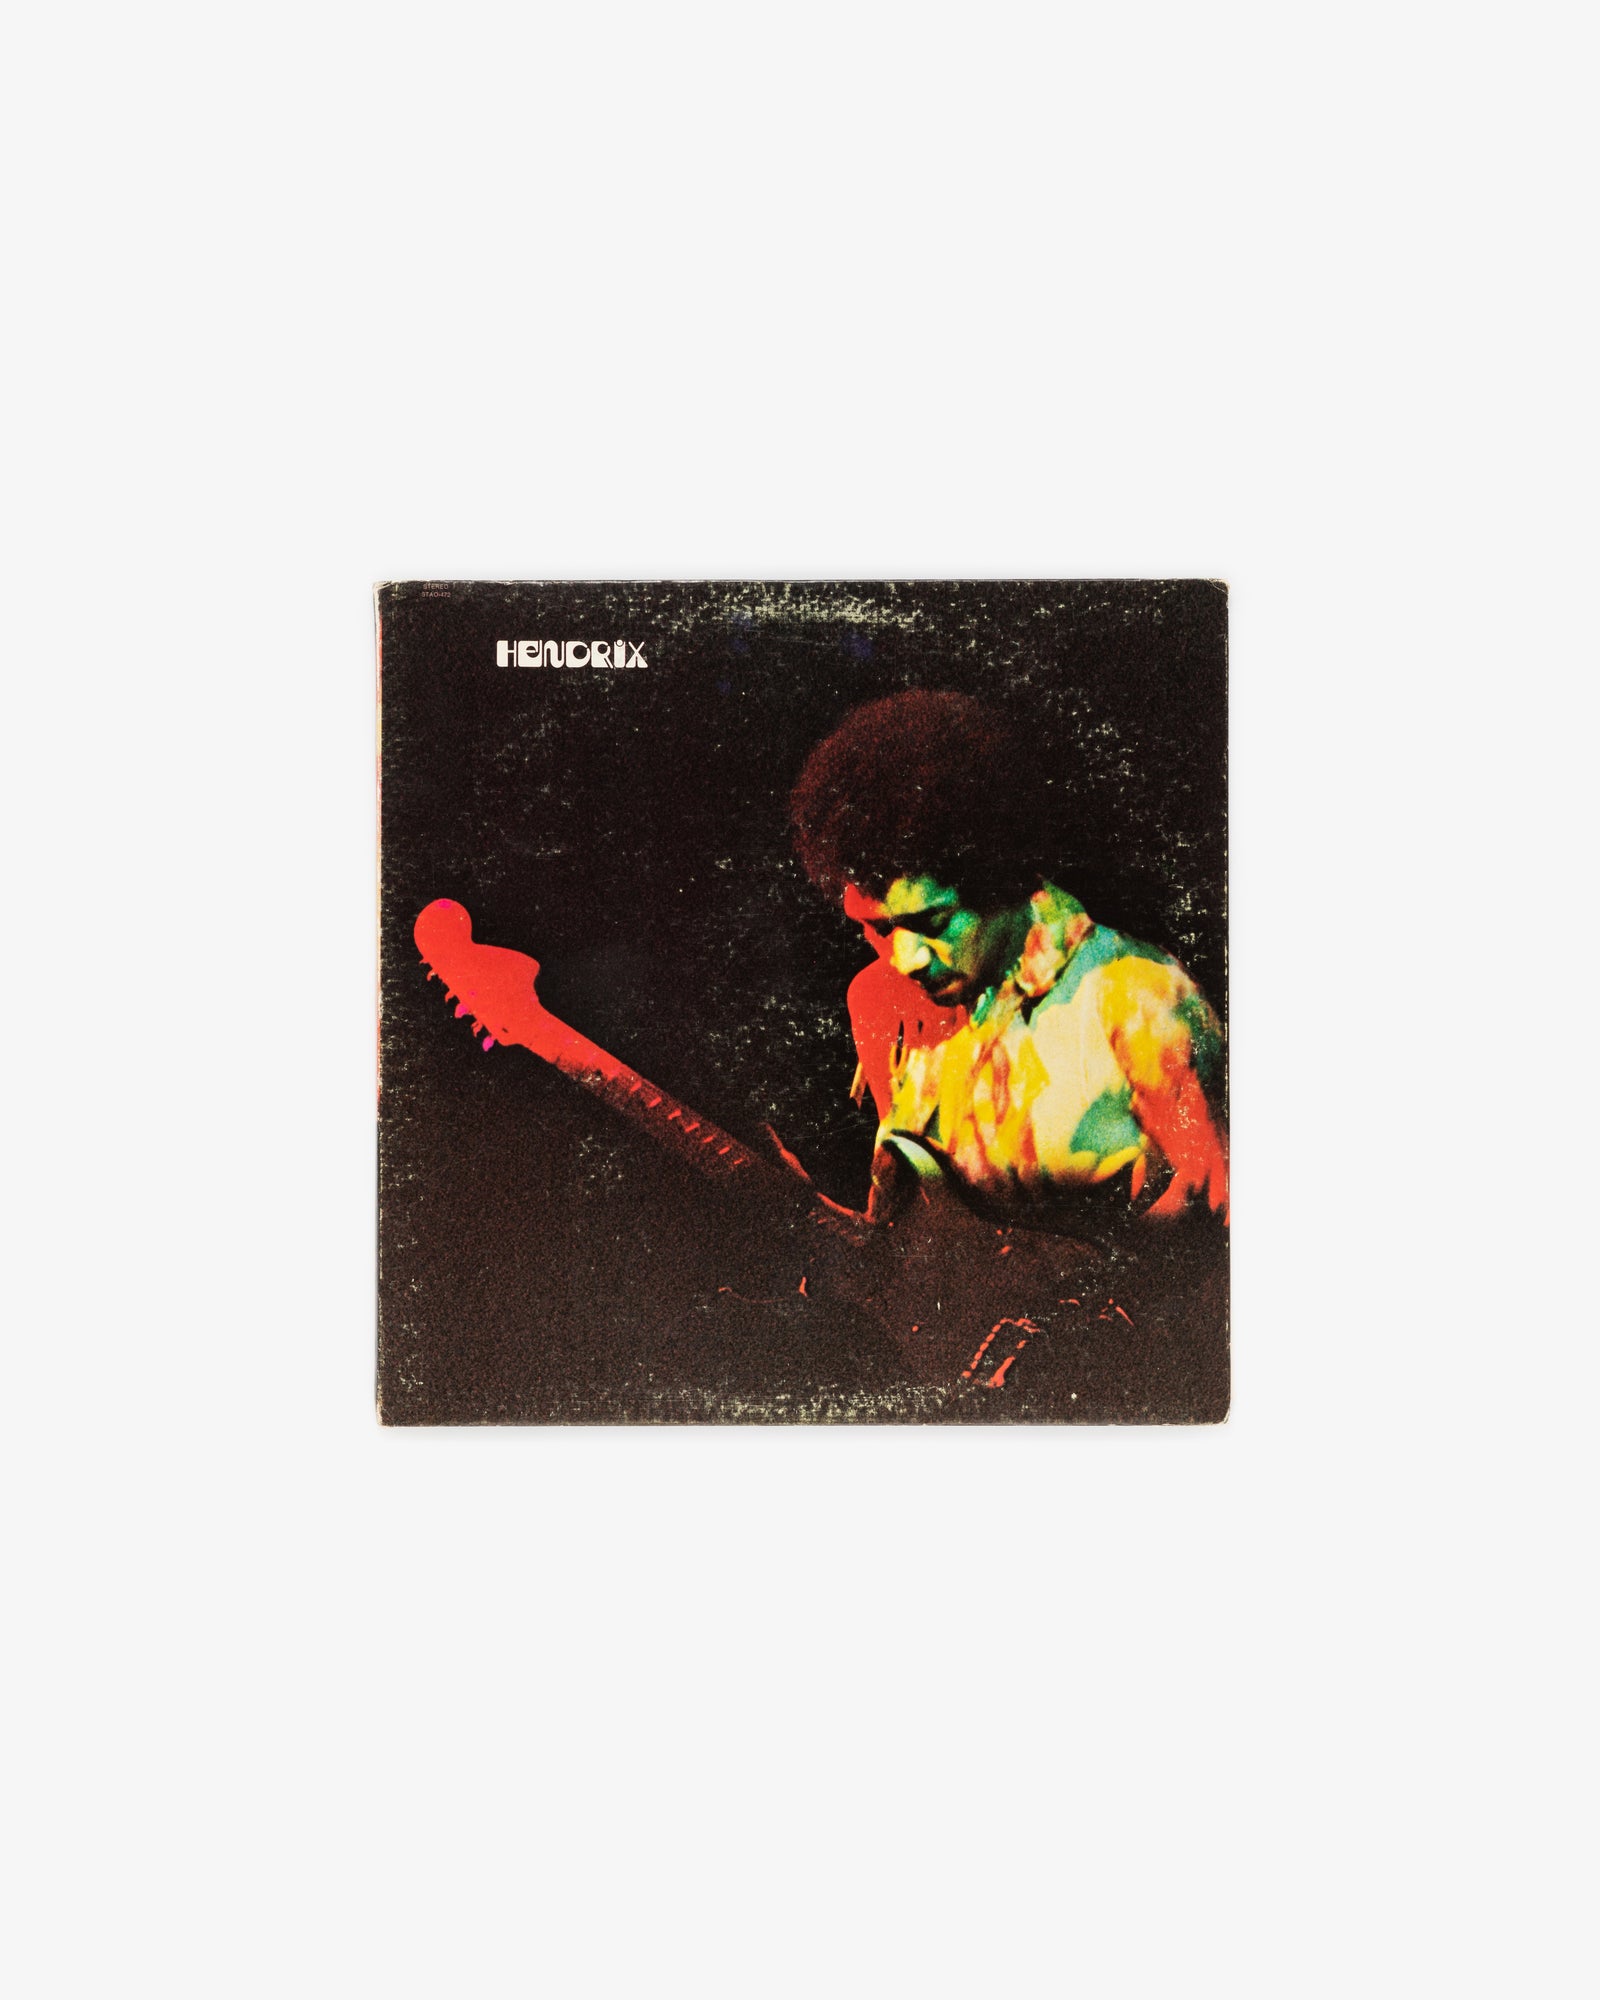 Jimi Hendrix Band of Gypsys LP